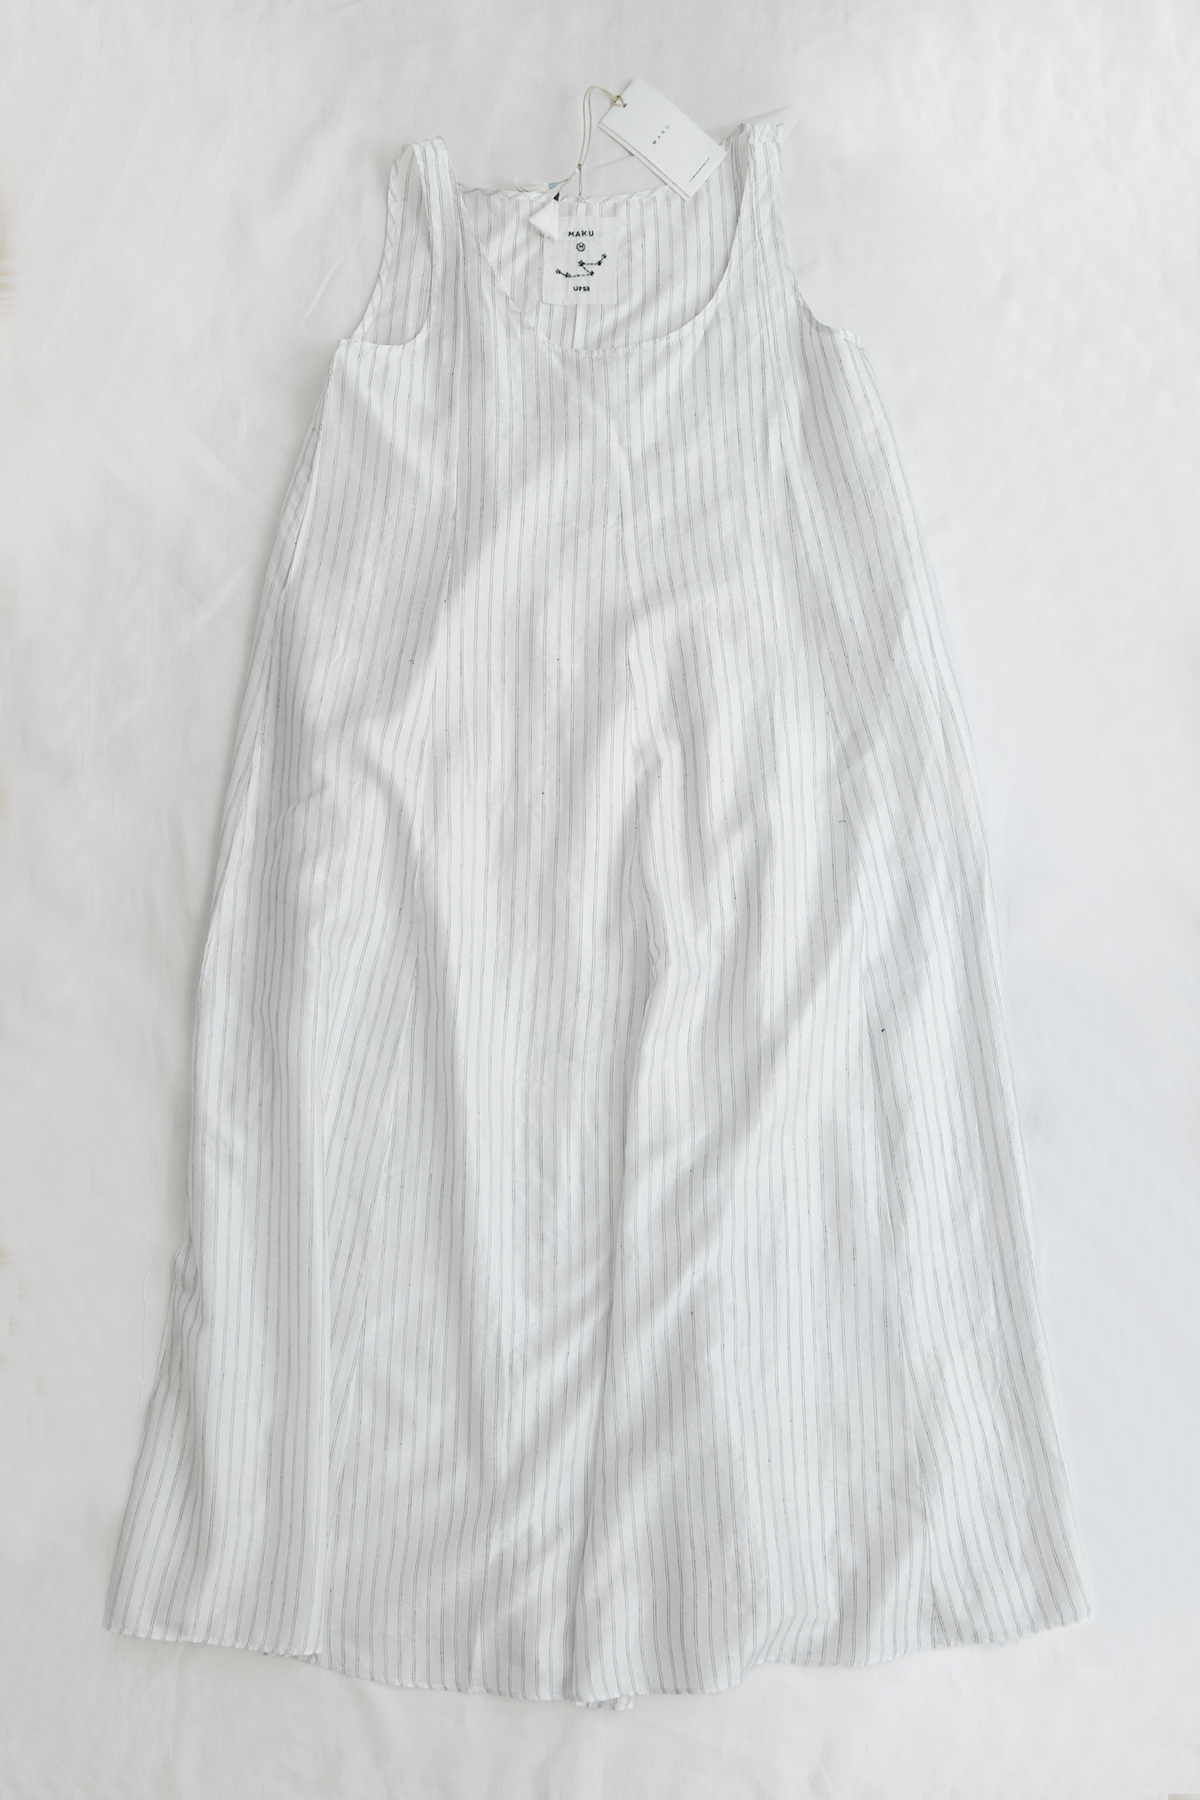 Maku Textiles Ursa Women's Dress - Off White - Laid flat